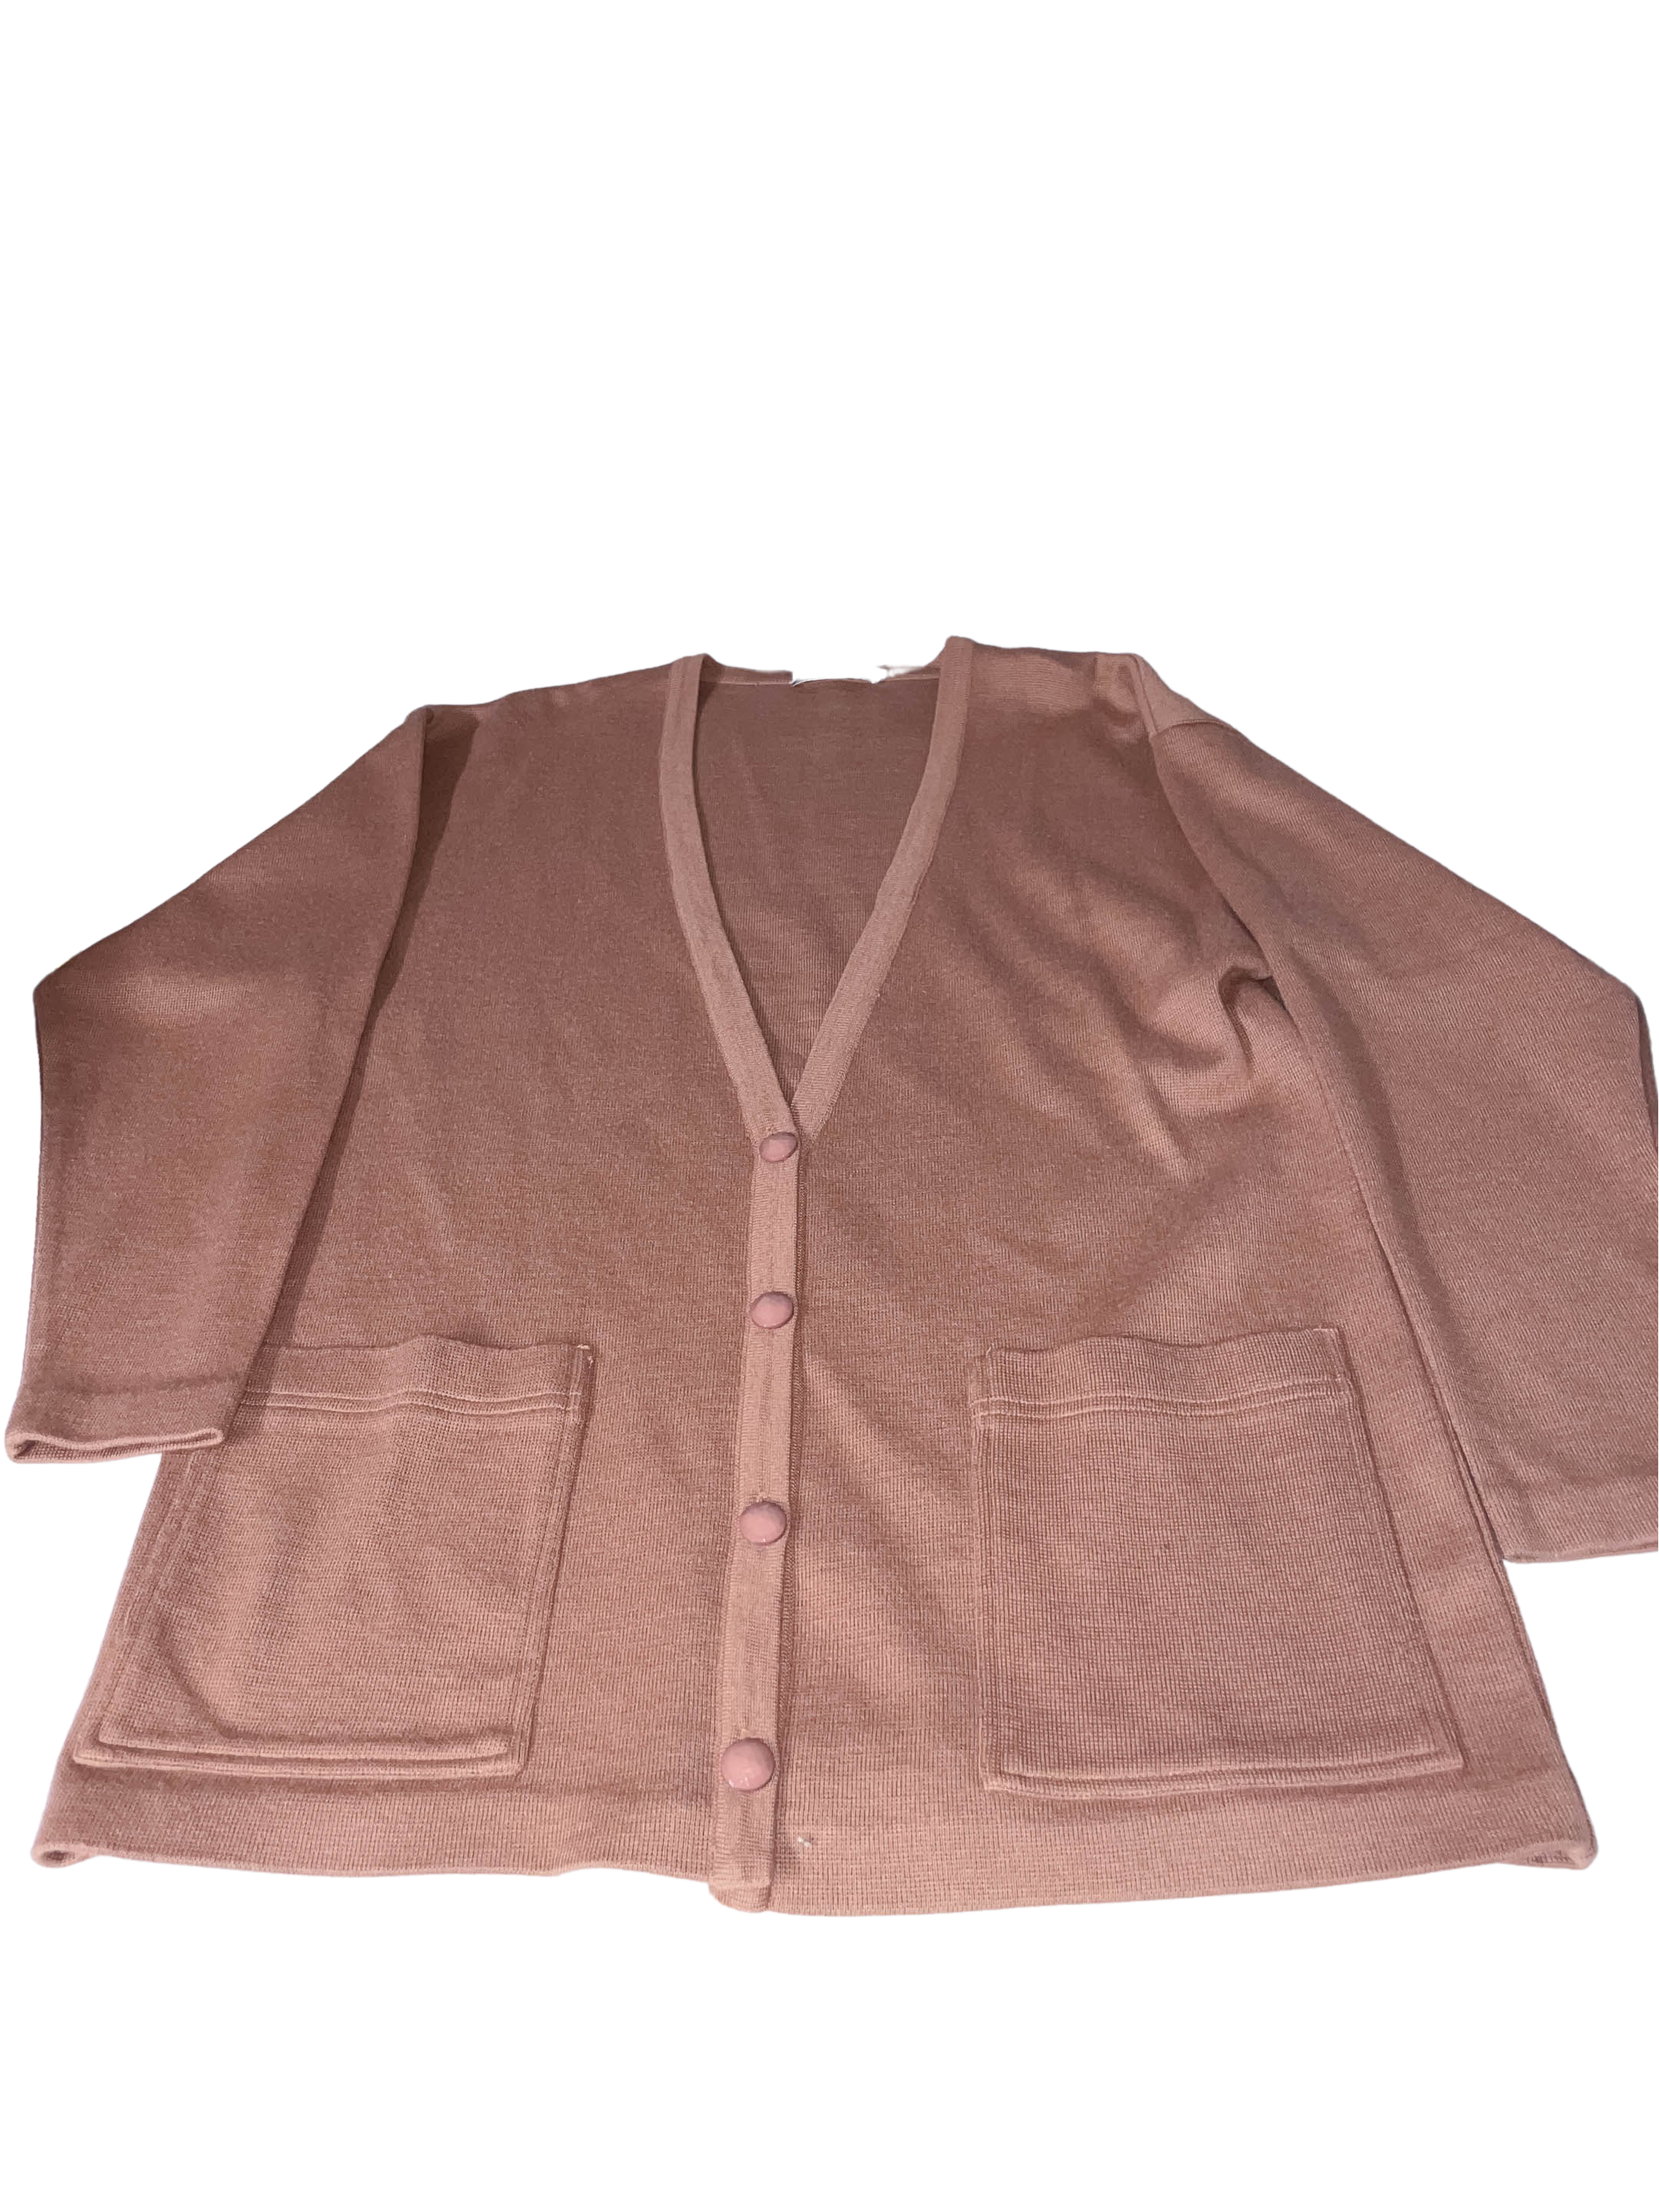 Vintage Brown arcylic wool v-neck botton up medium cardigan